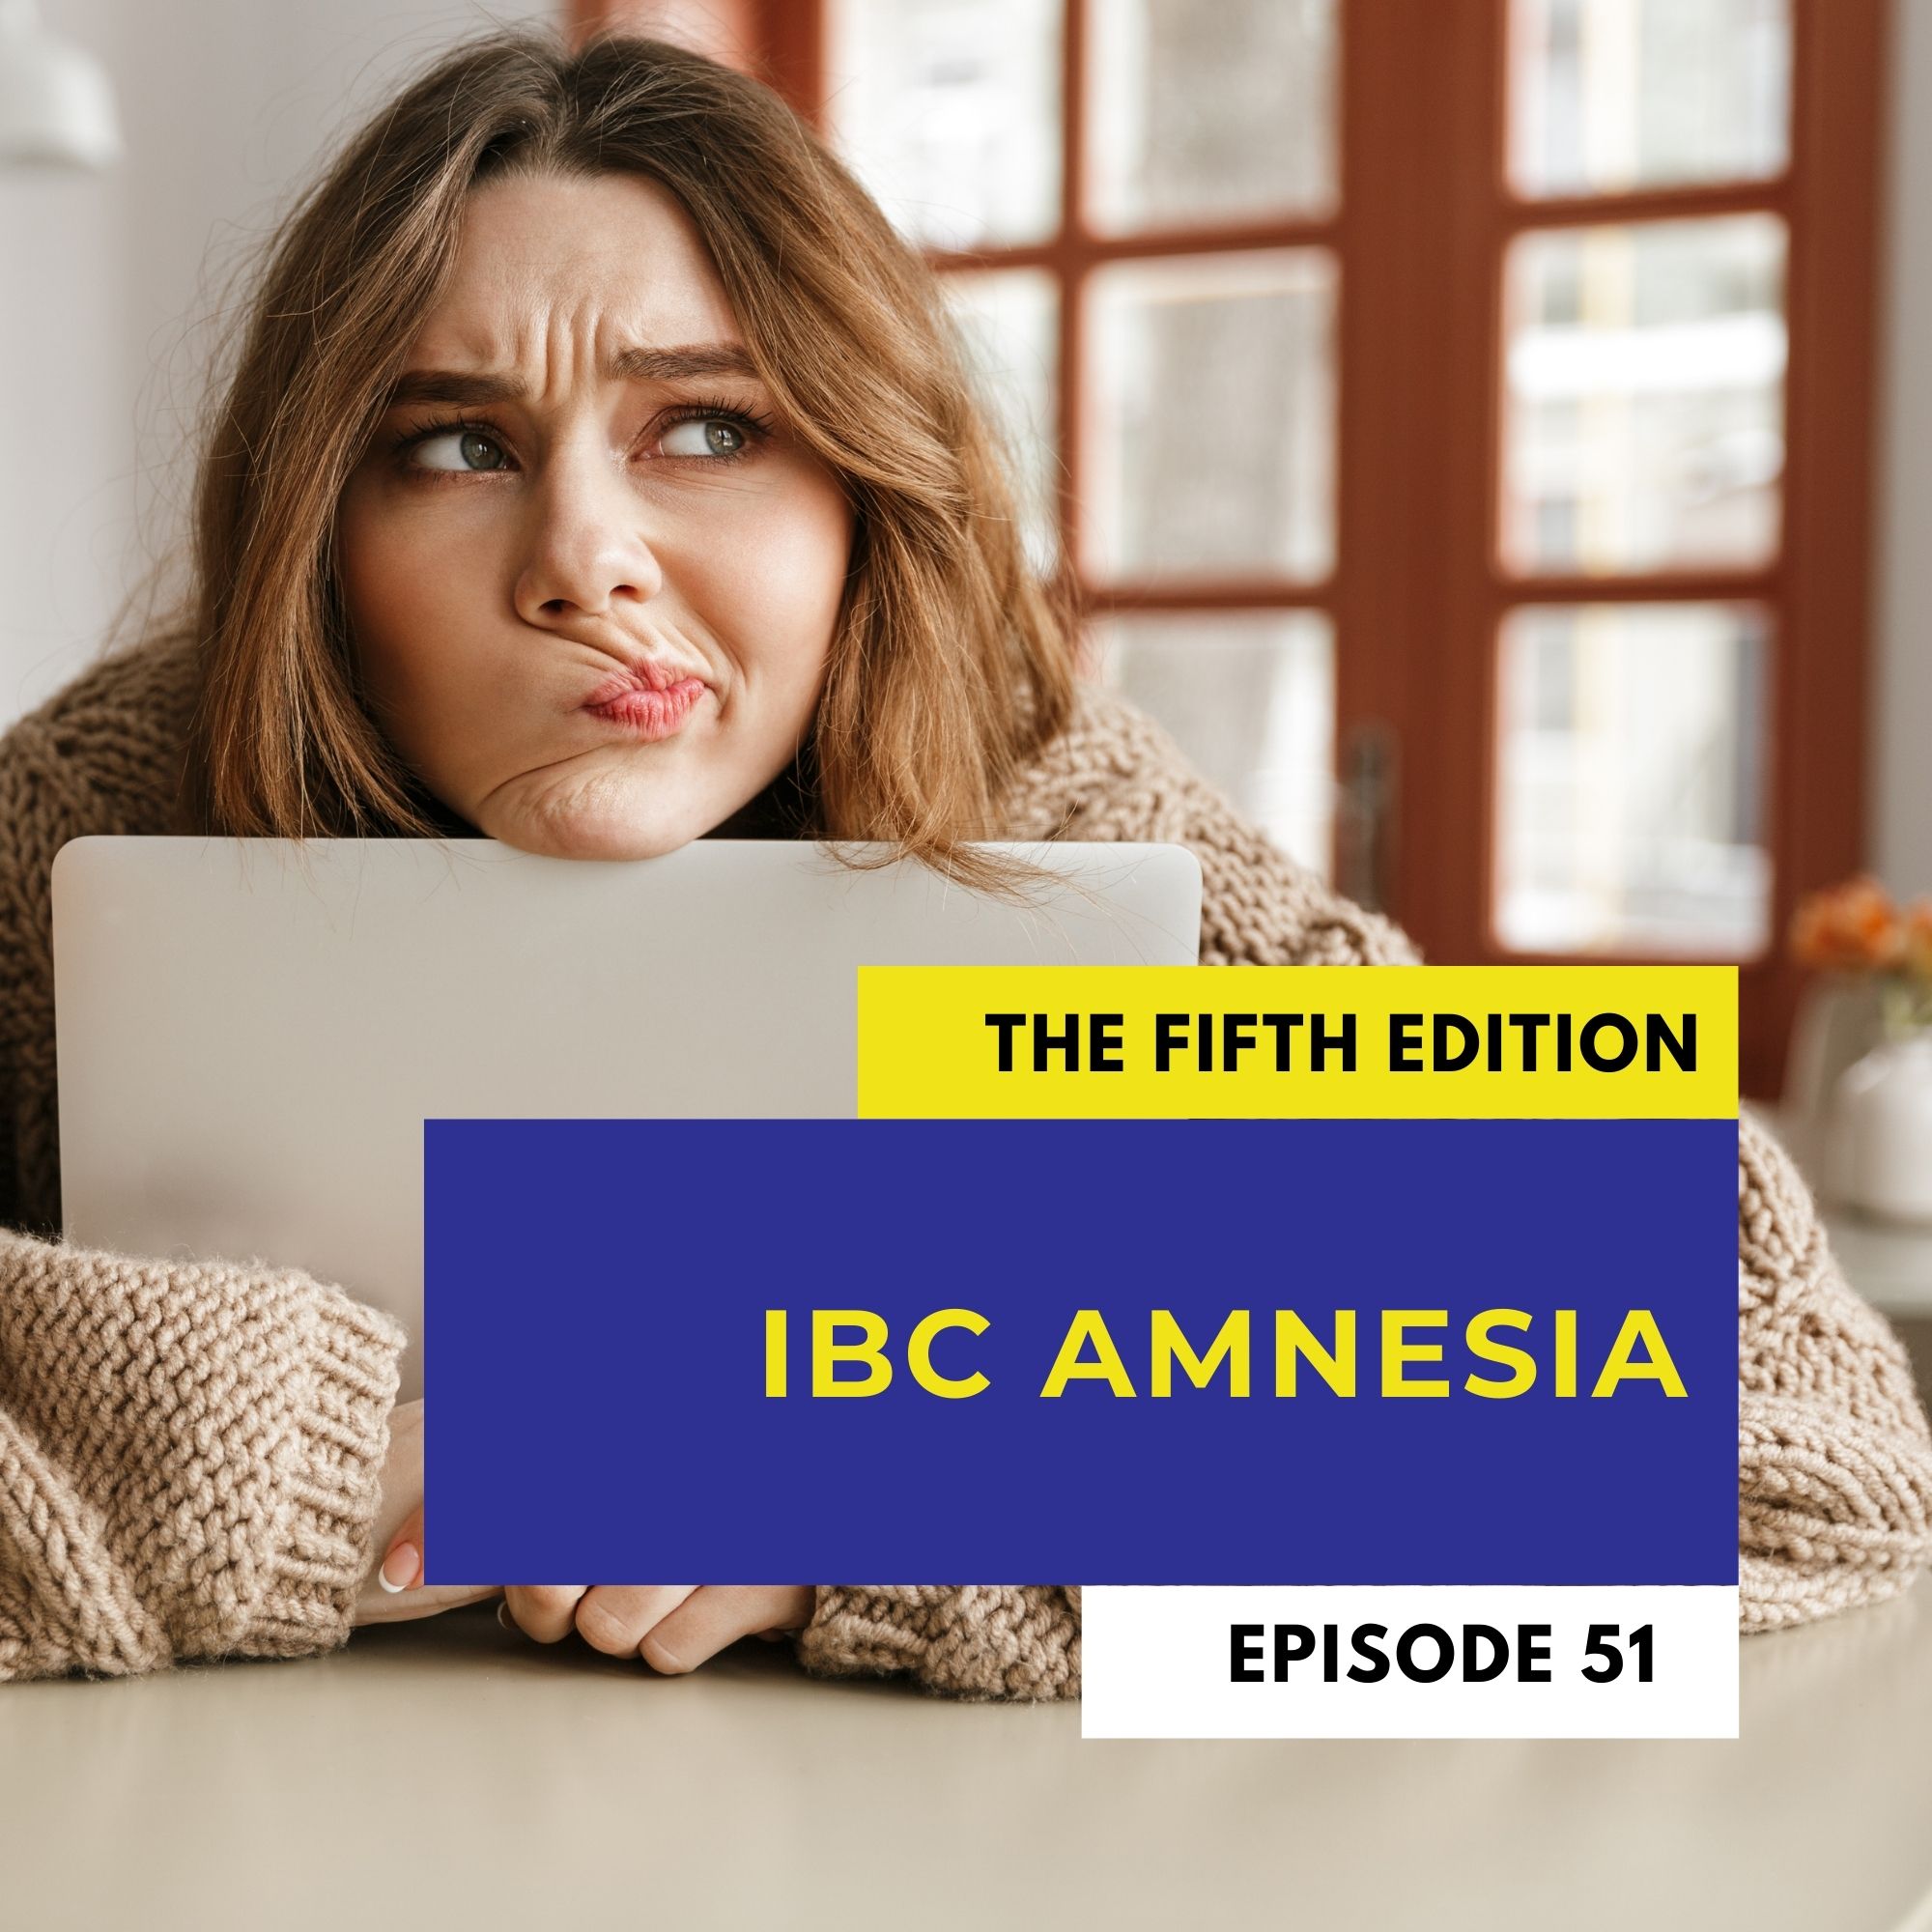 How To Avoid IBC Amnesia Image